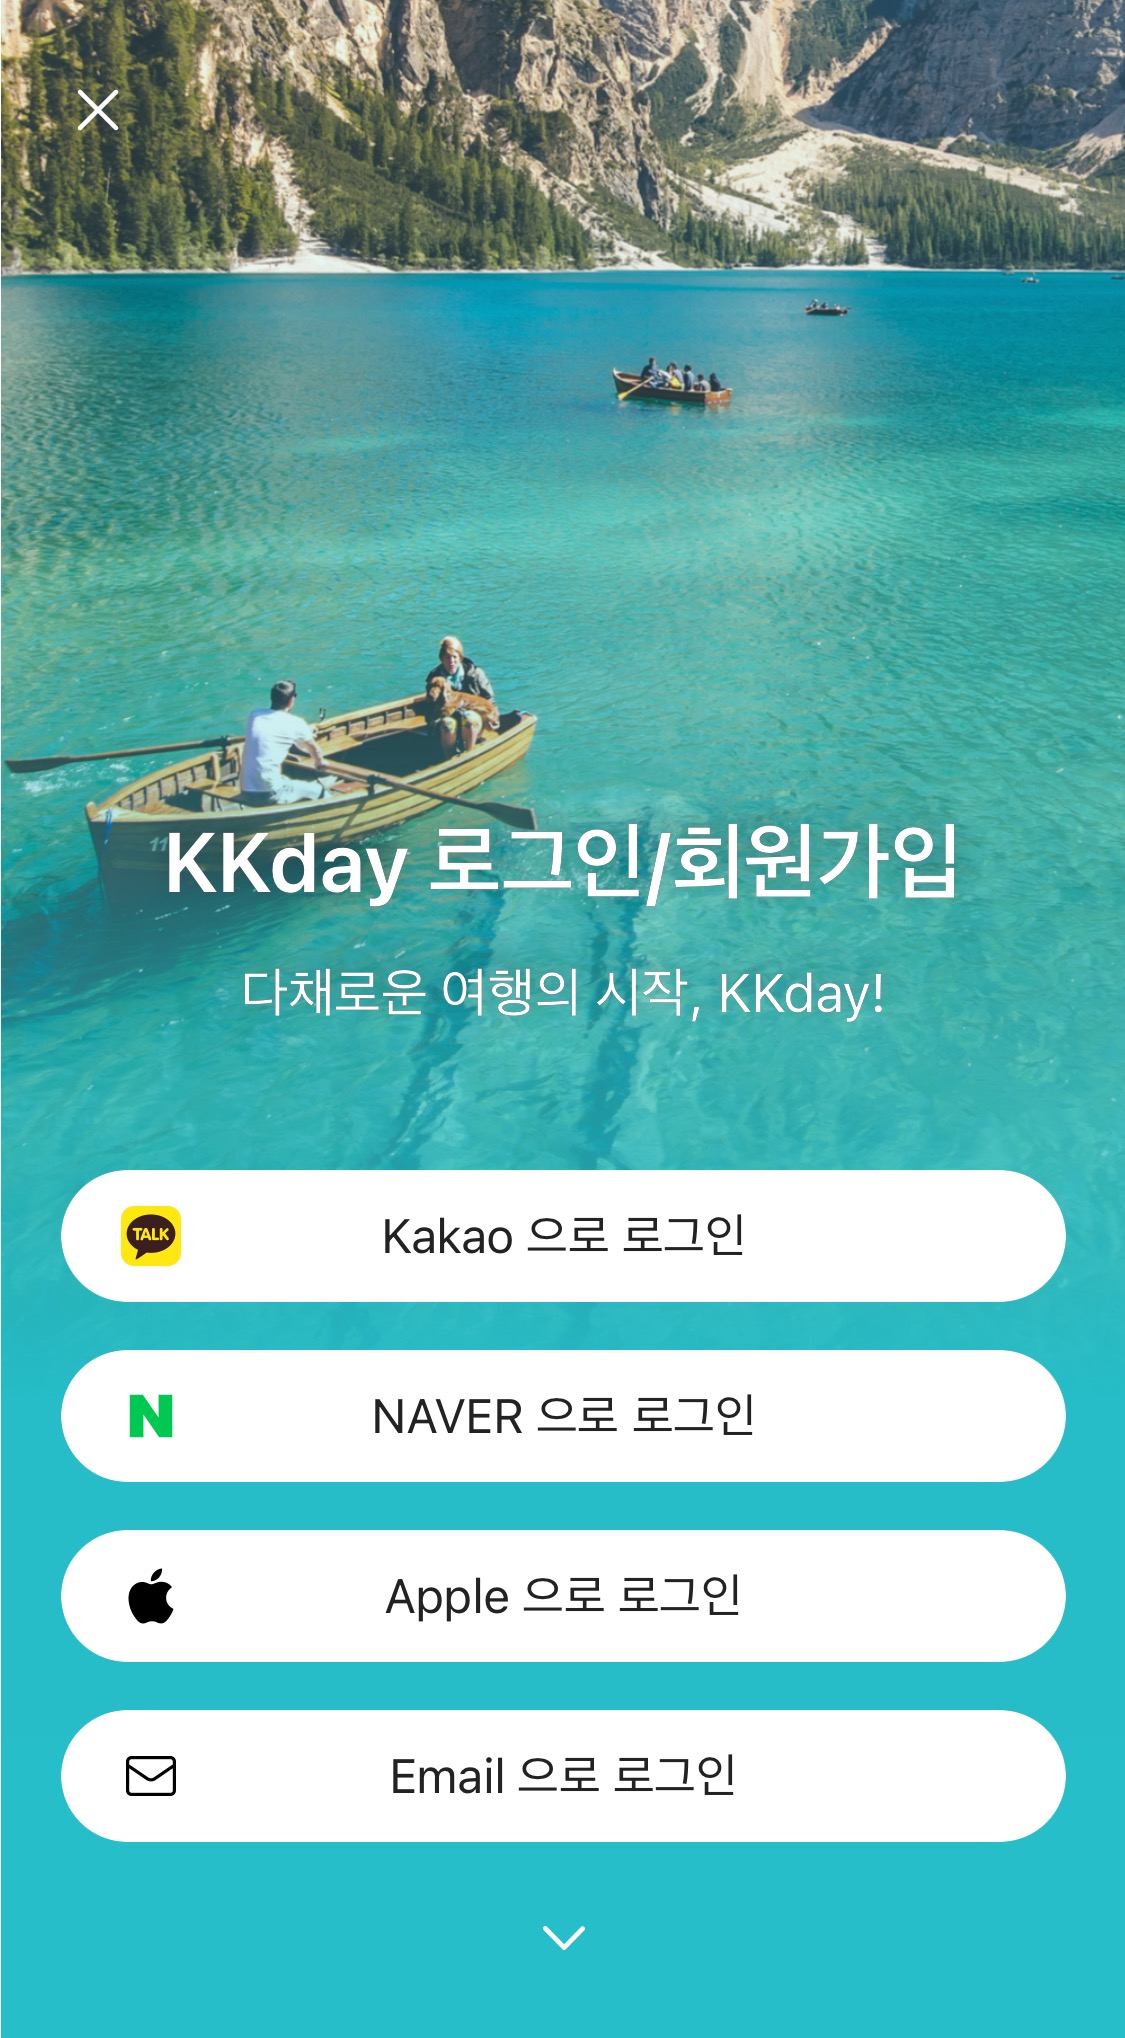 kkday 로그인/회원가입 화면